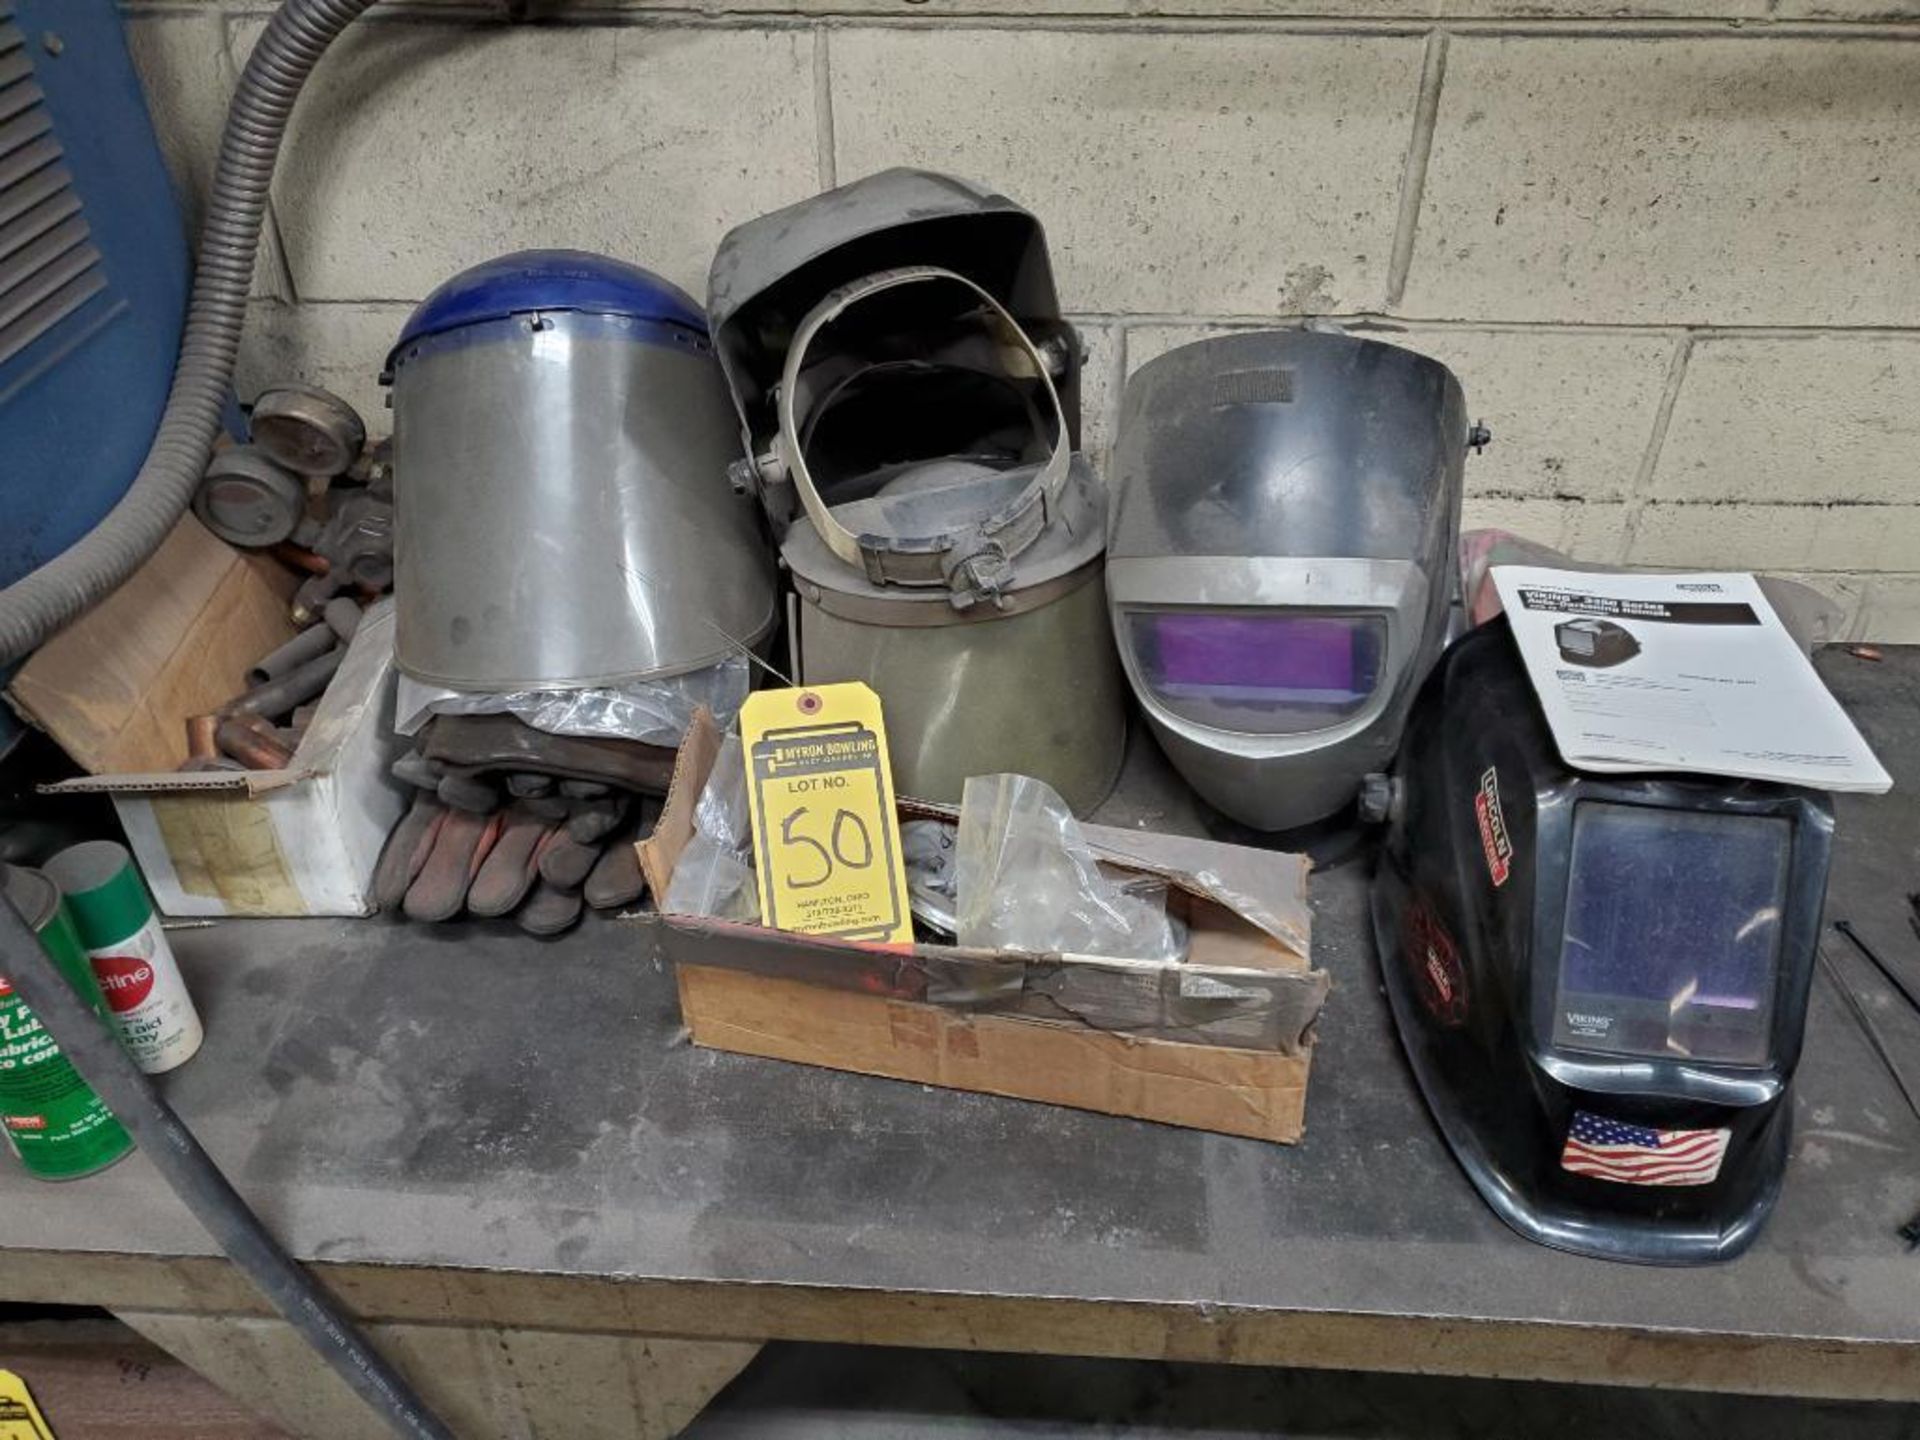 Welding Supplies; Helmets, Shields, Torch Heads, Tips, Gloves, & Misc., Acetylene Torch Cart w/ Twin